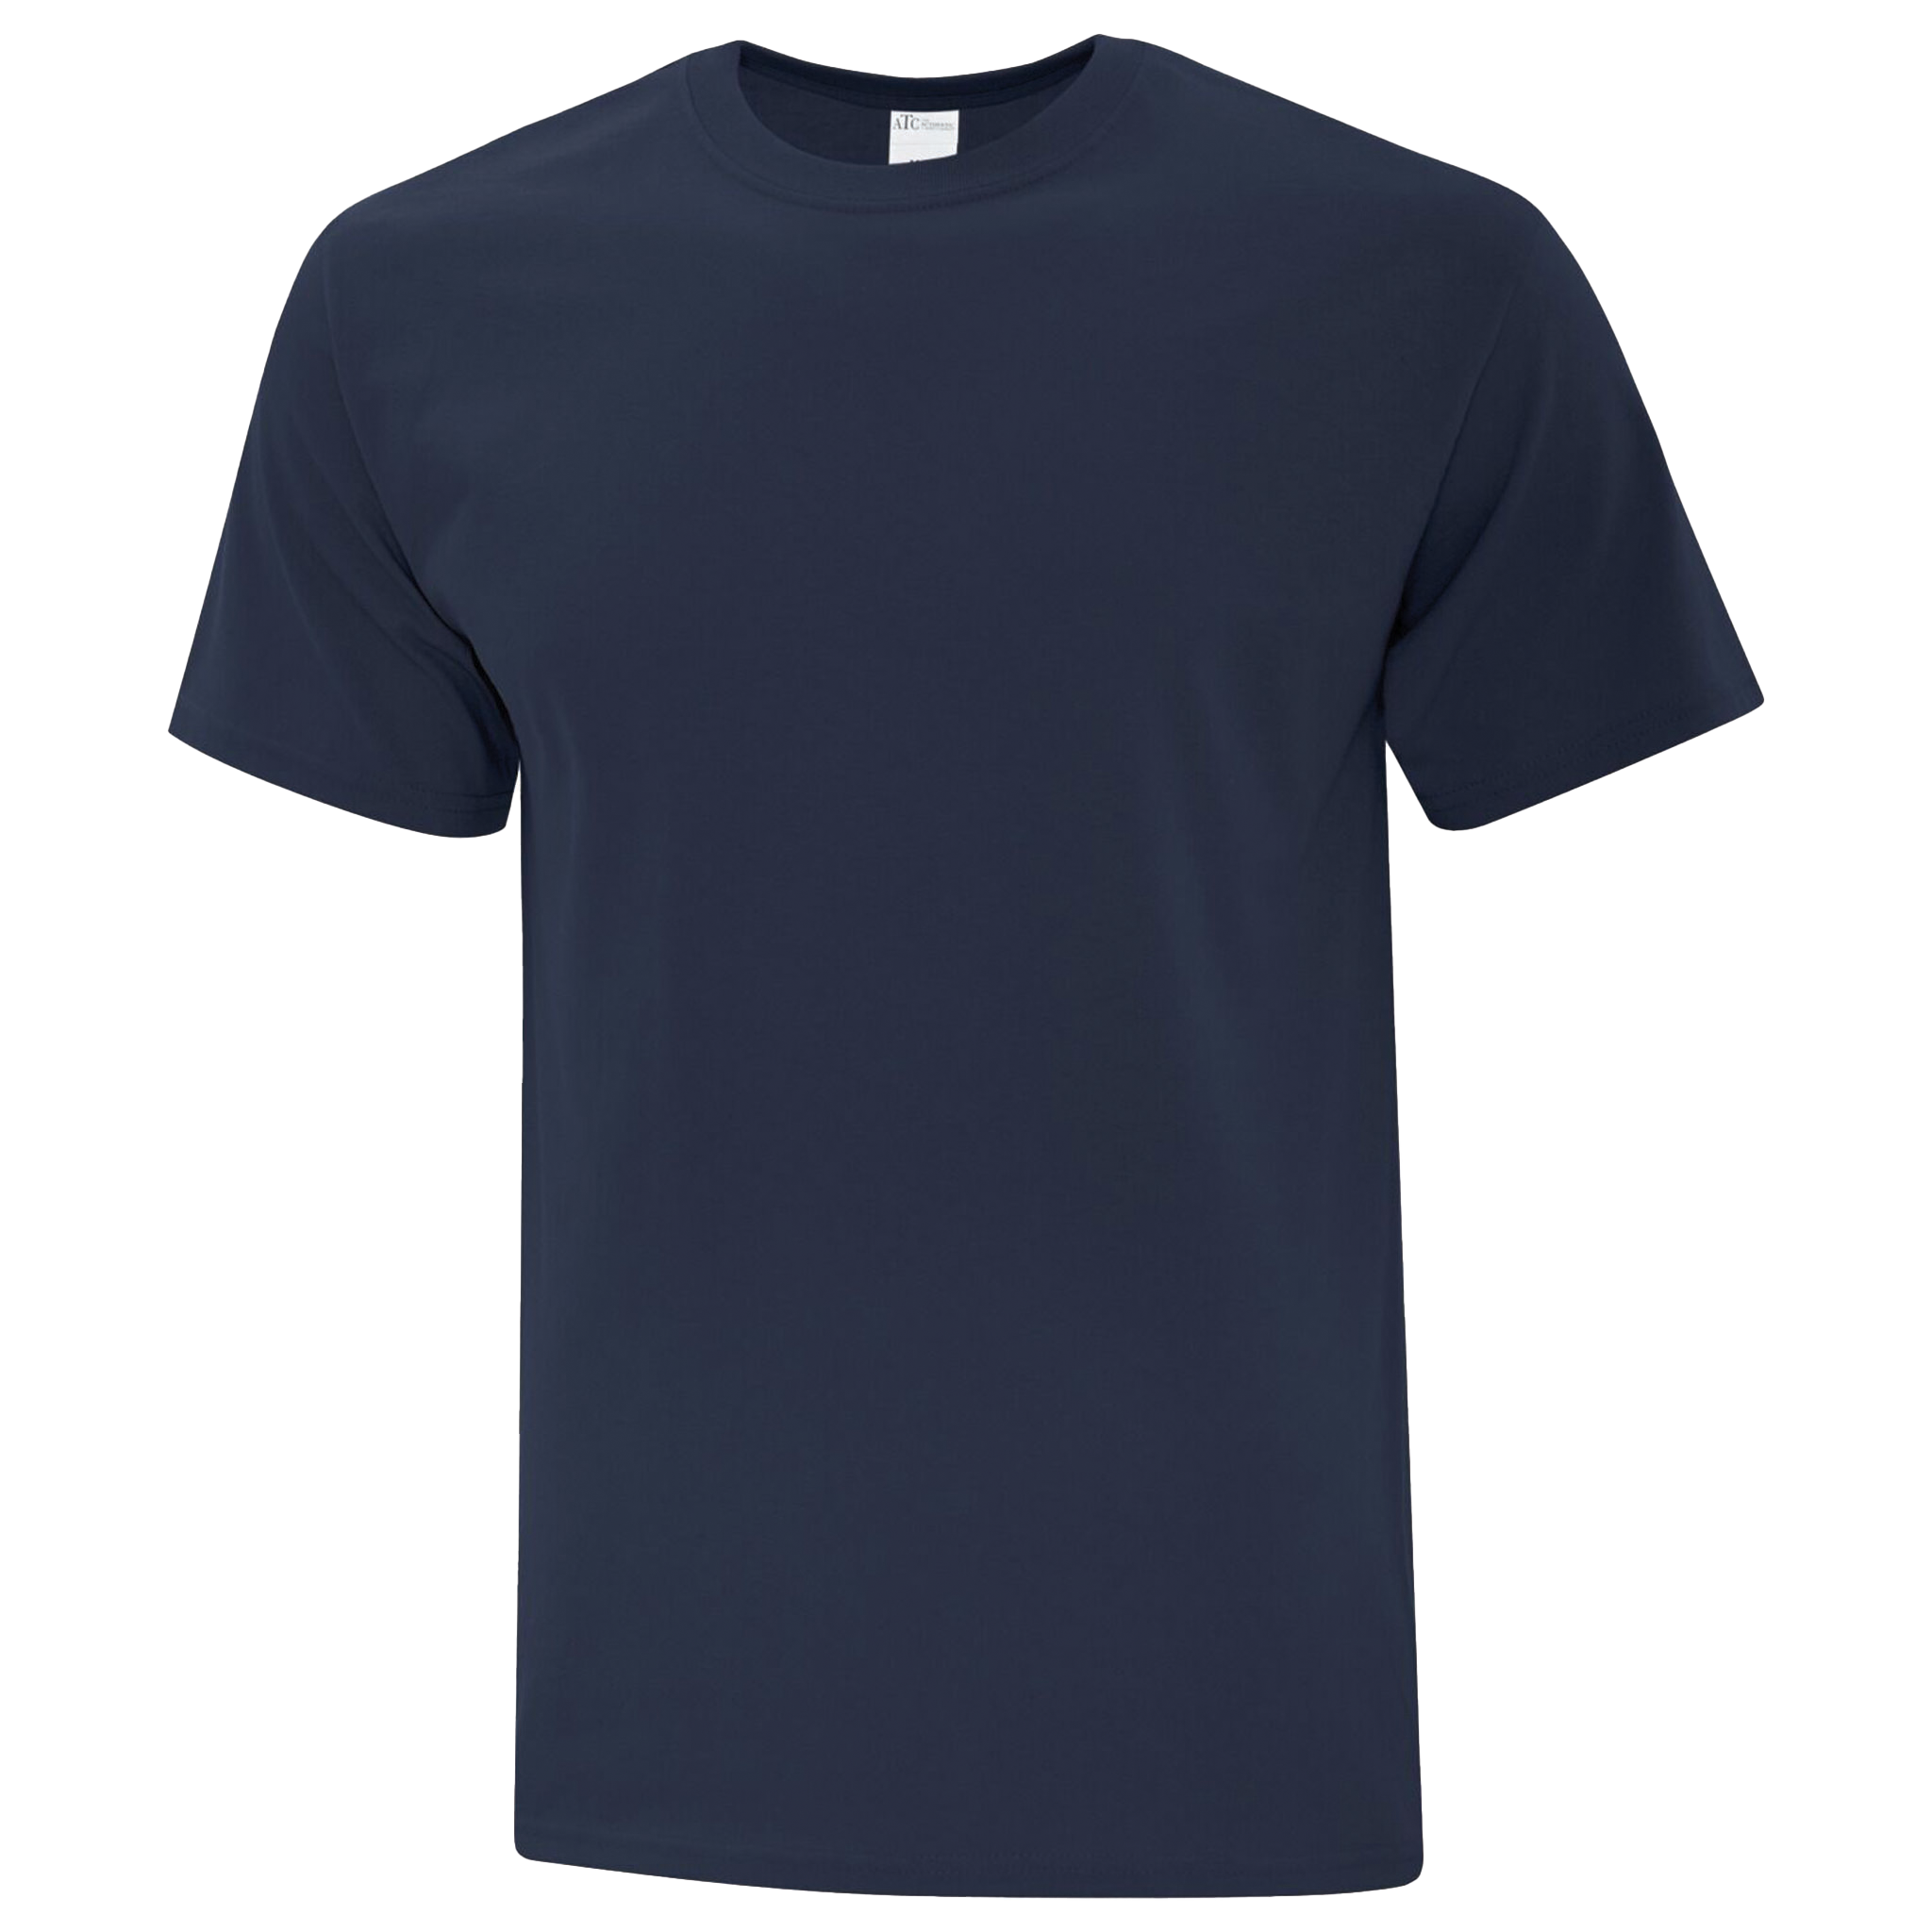 ATC Everyday Cotton T-Shirt - Men's Sizing S-4XL - Navy